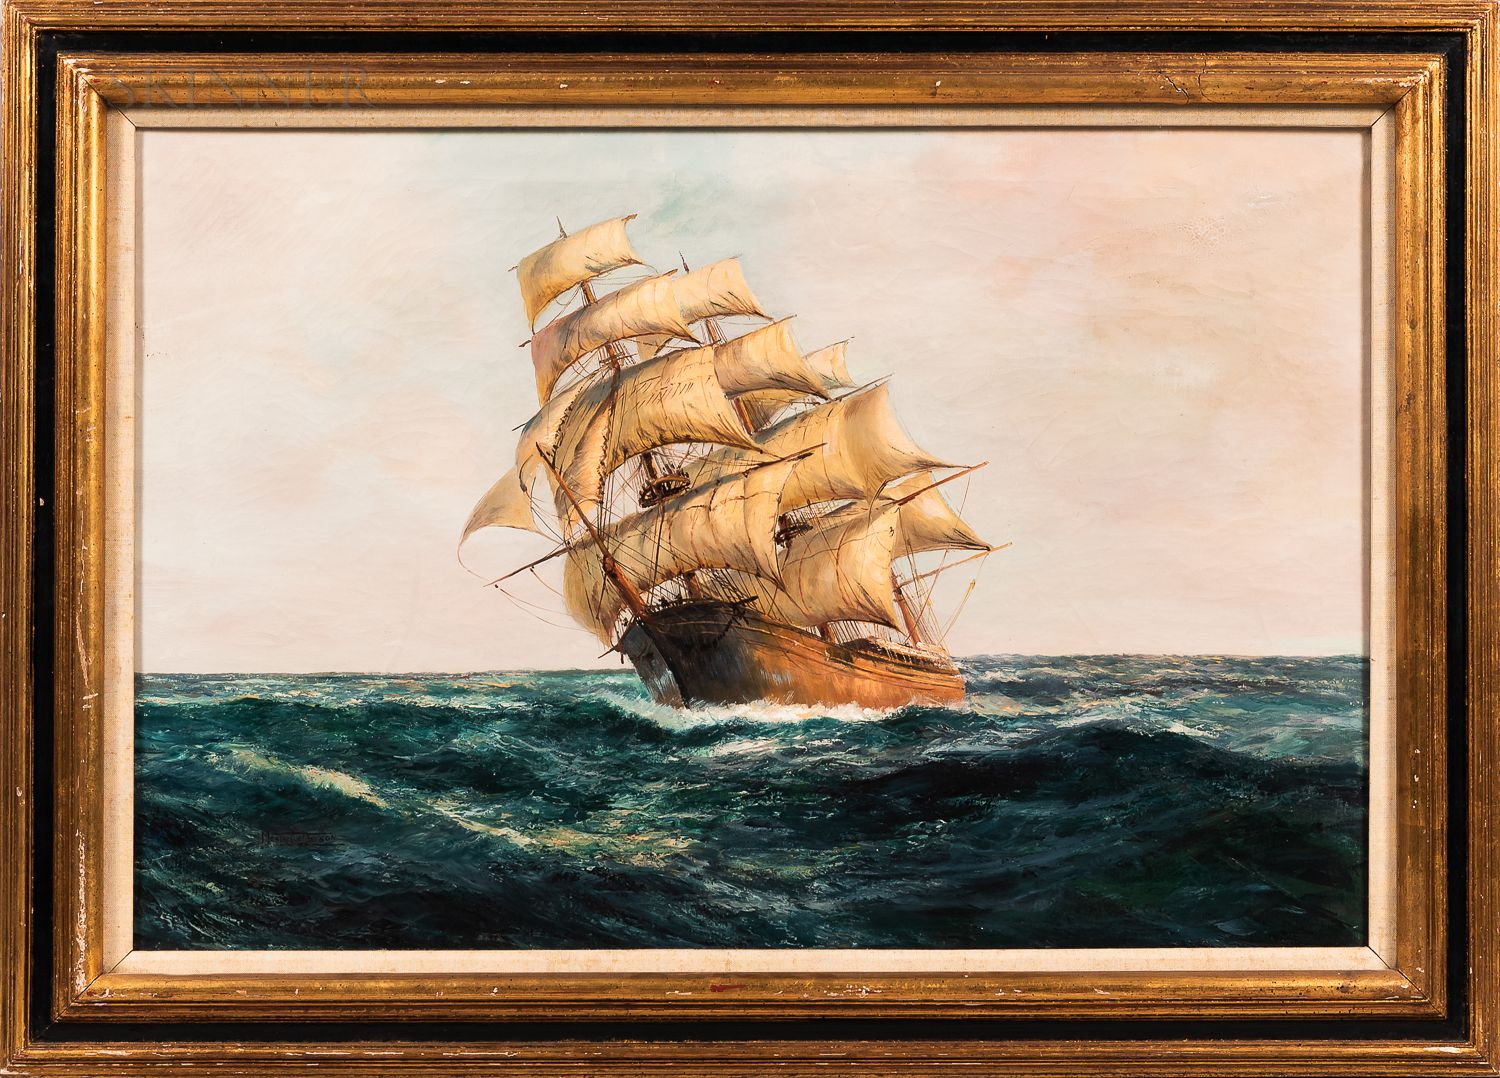 Sold at Auction: Montague Dawson, Montague Dawson, (British, 1890-1973),  The Rising Wind, color lithograph, 36 x 24